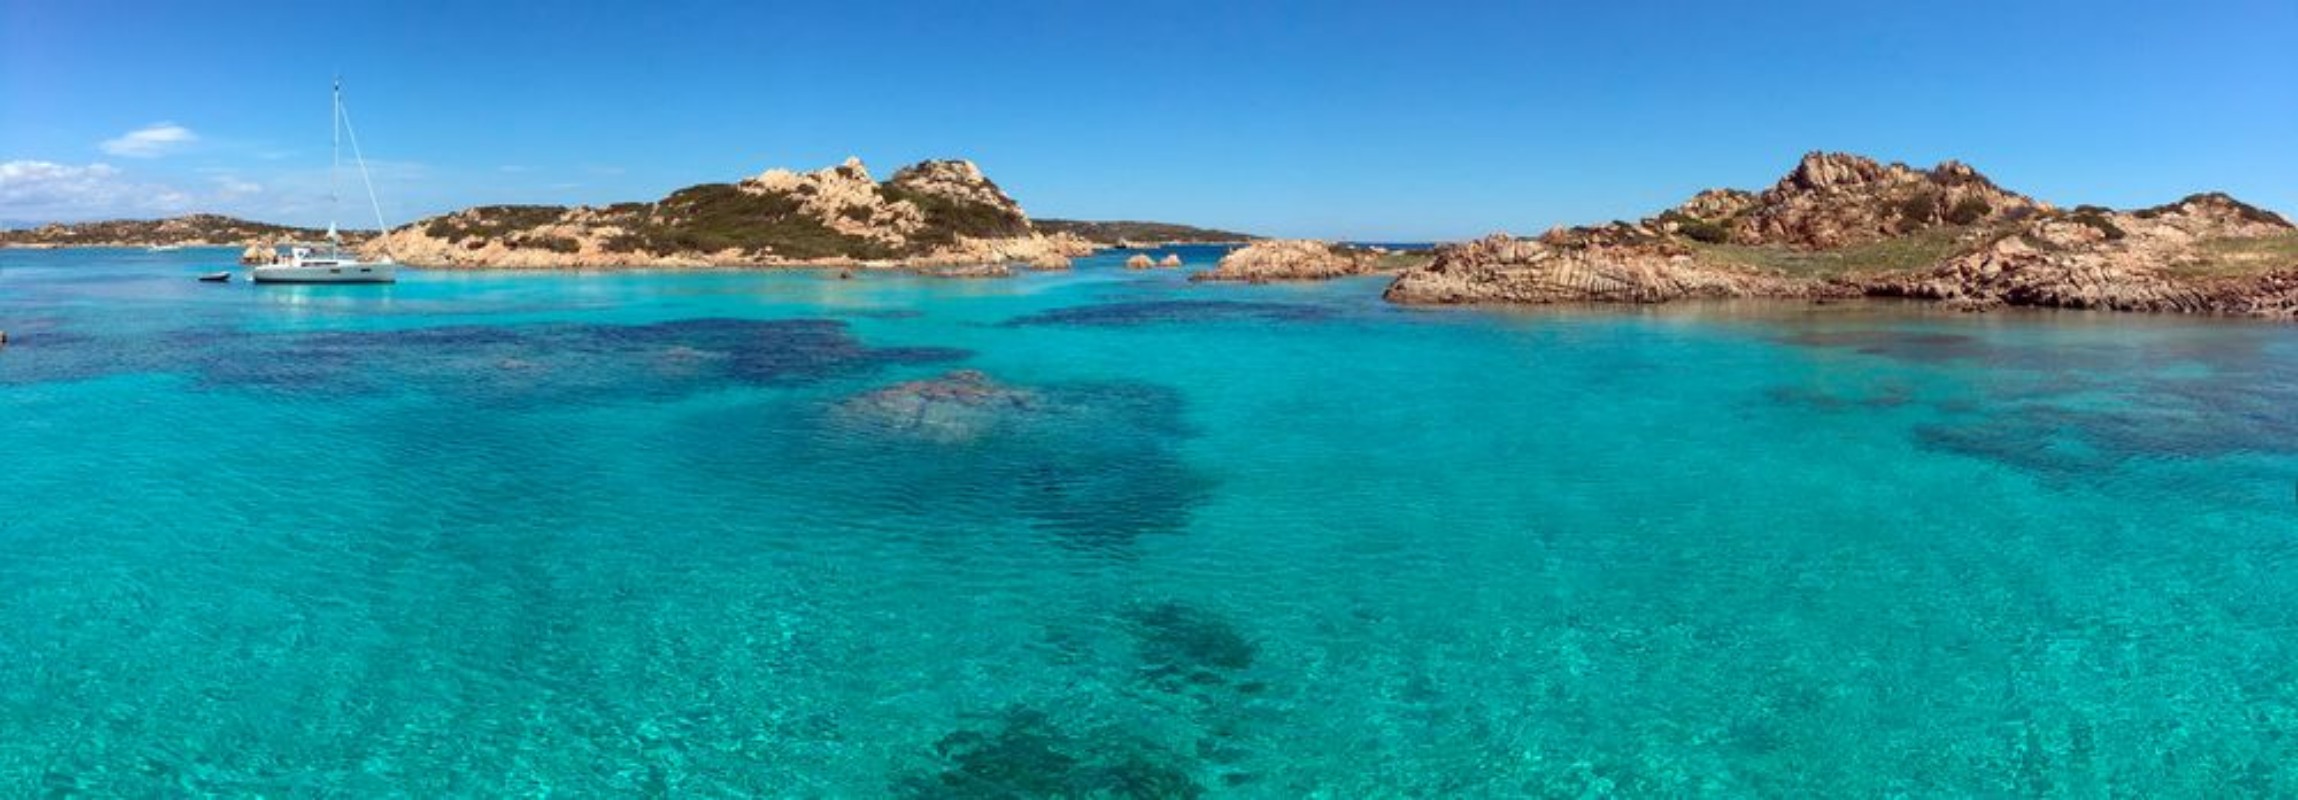 Afbeeldingen van Maddalena Islands - Sardinia - Italy